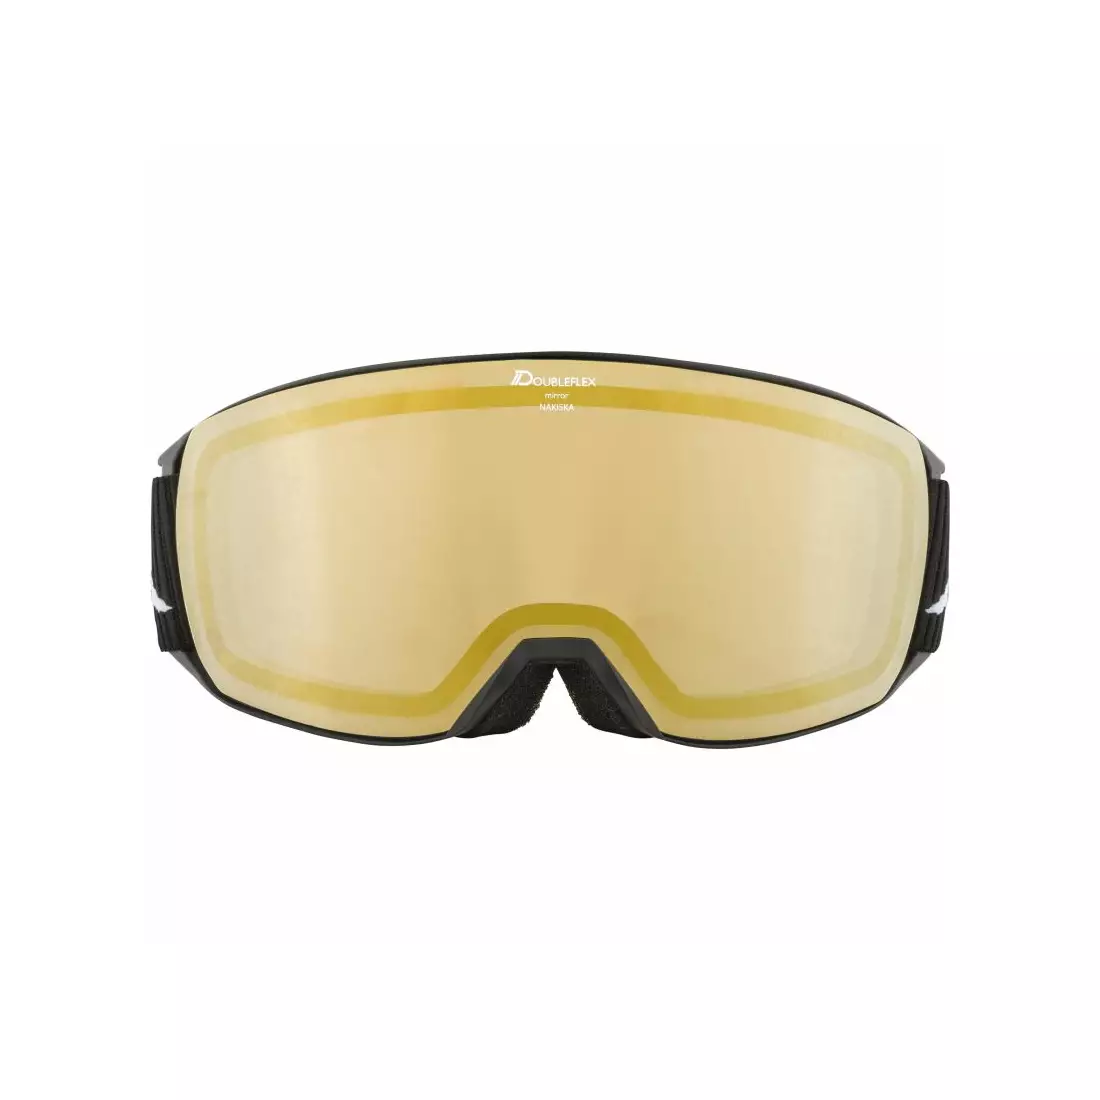 ALPINA ski / snowboard goggles M40 NAKISKA HM black A7280831